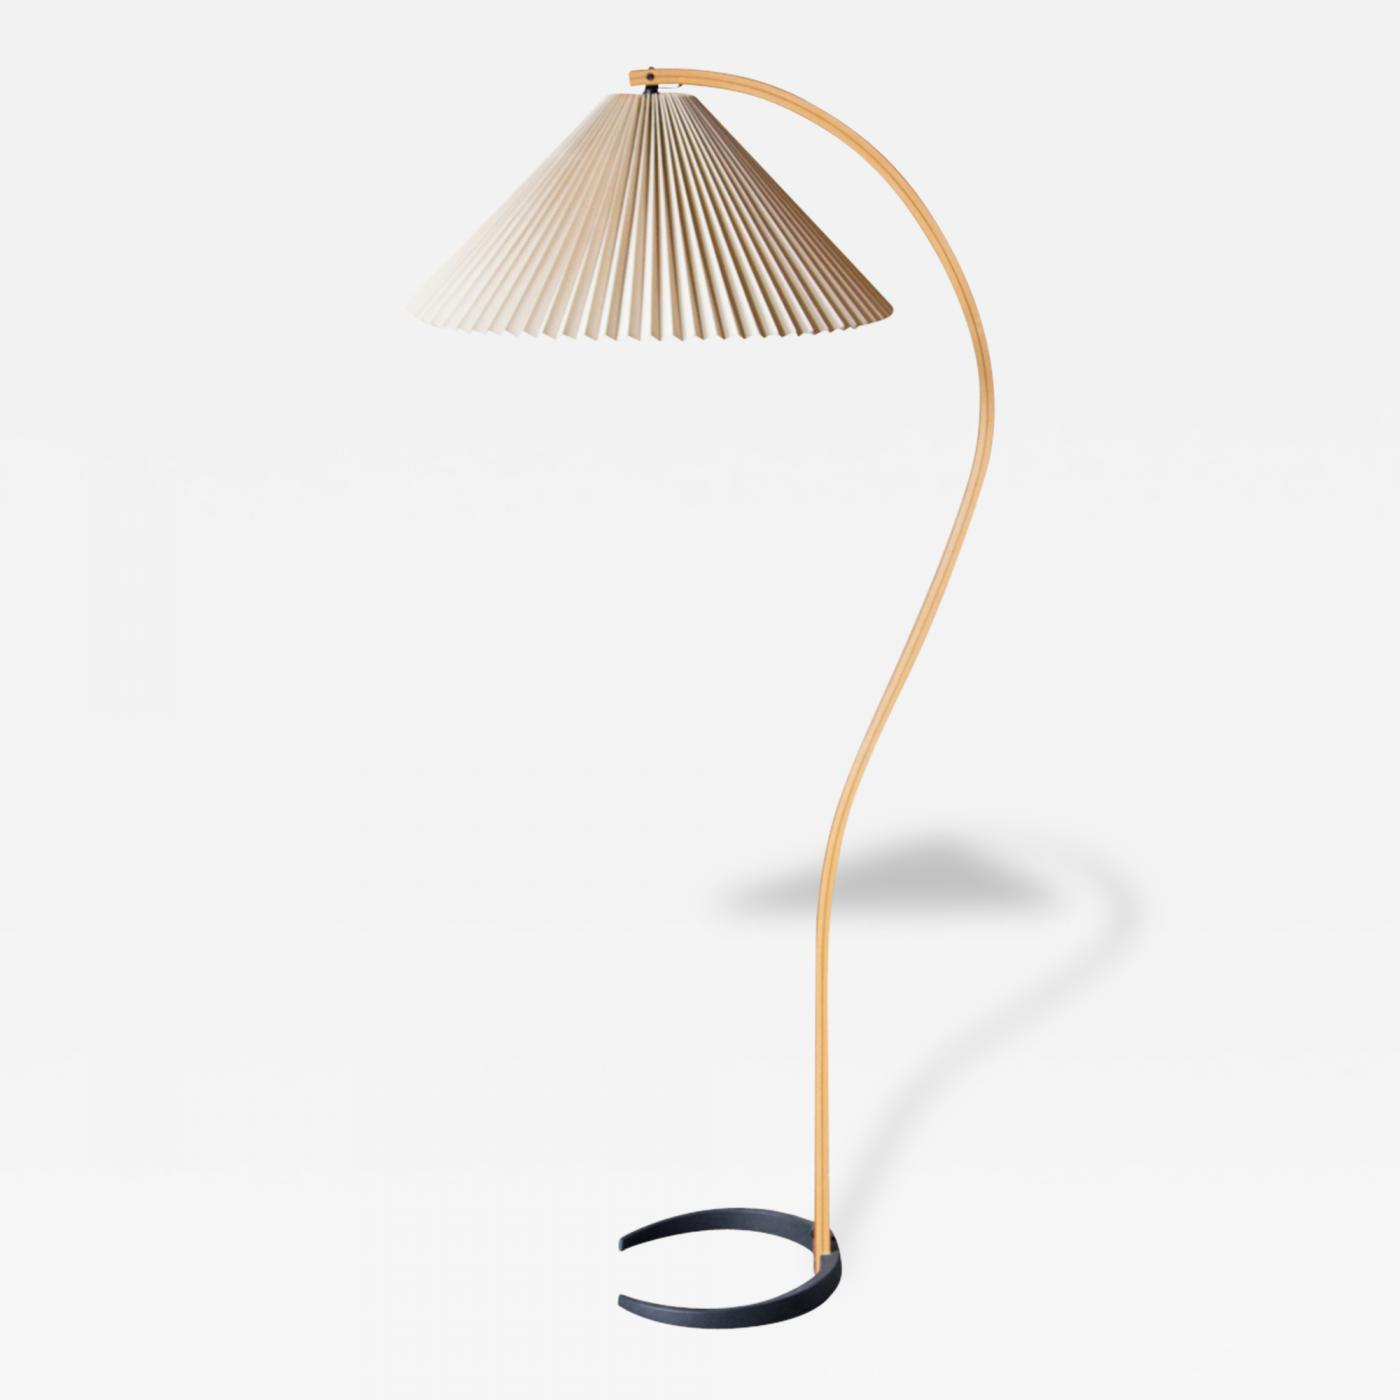 Caprani Light As Caprani Light Ls Bentwood Floor Lamp inside sizing 1400 X 1400